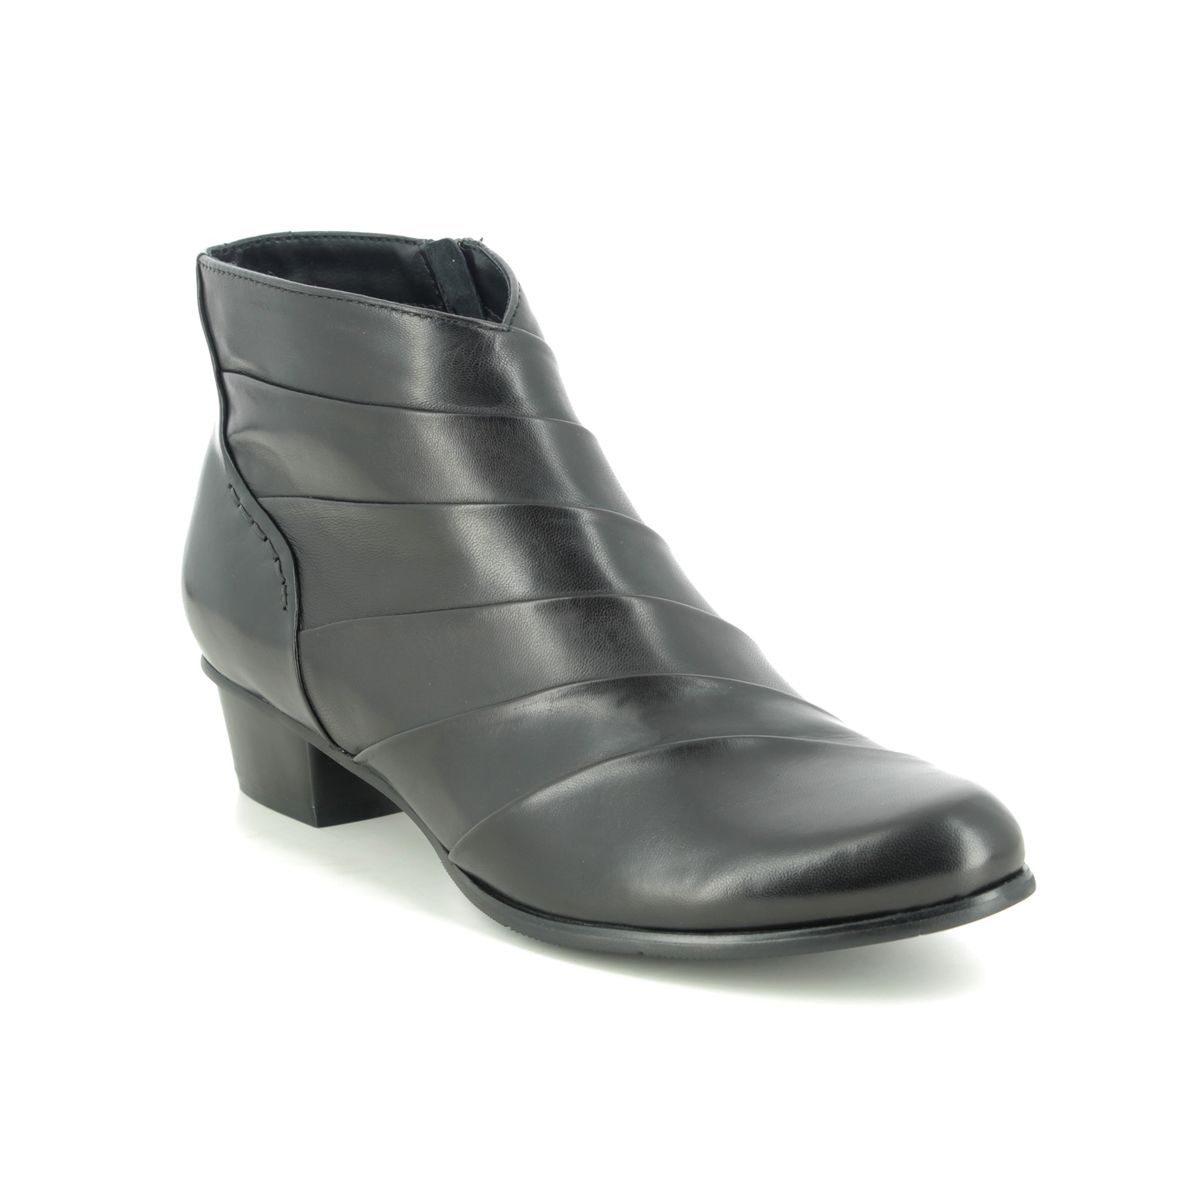 Regarde le Ciel Stefany 293 0293-003 Black leather Ankle Boots